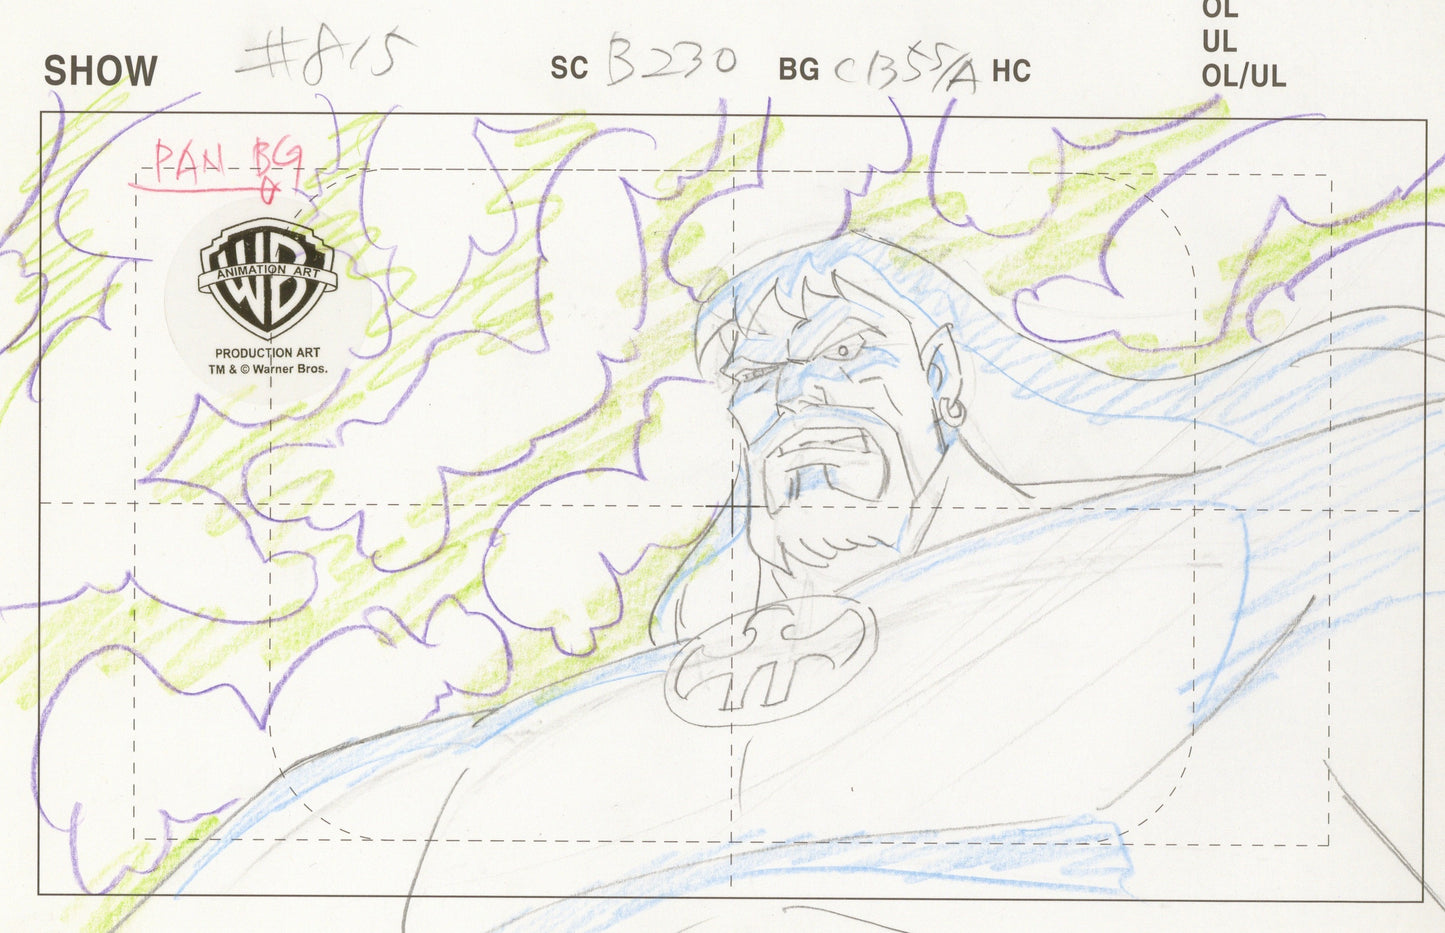 Justice League Original Production Drawing: Aquaman